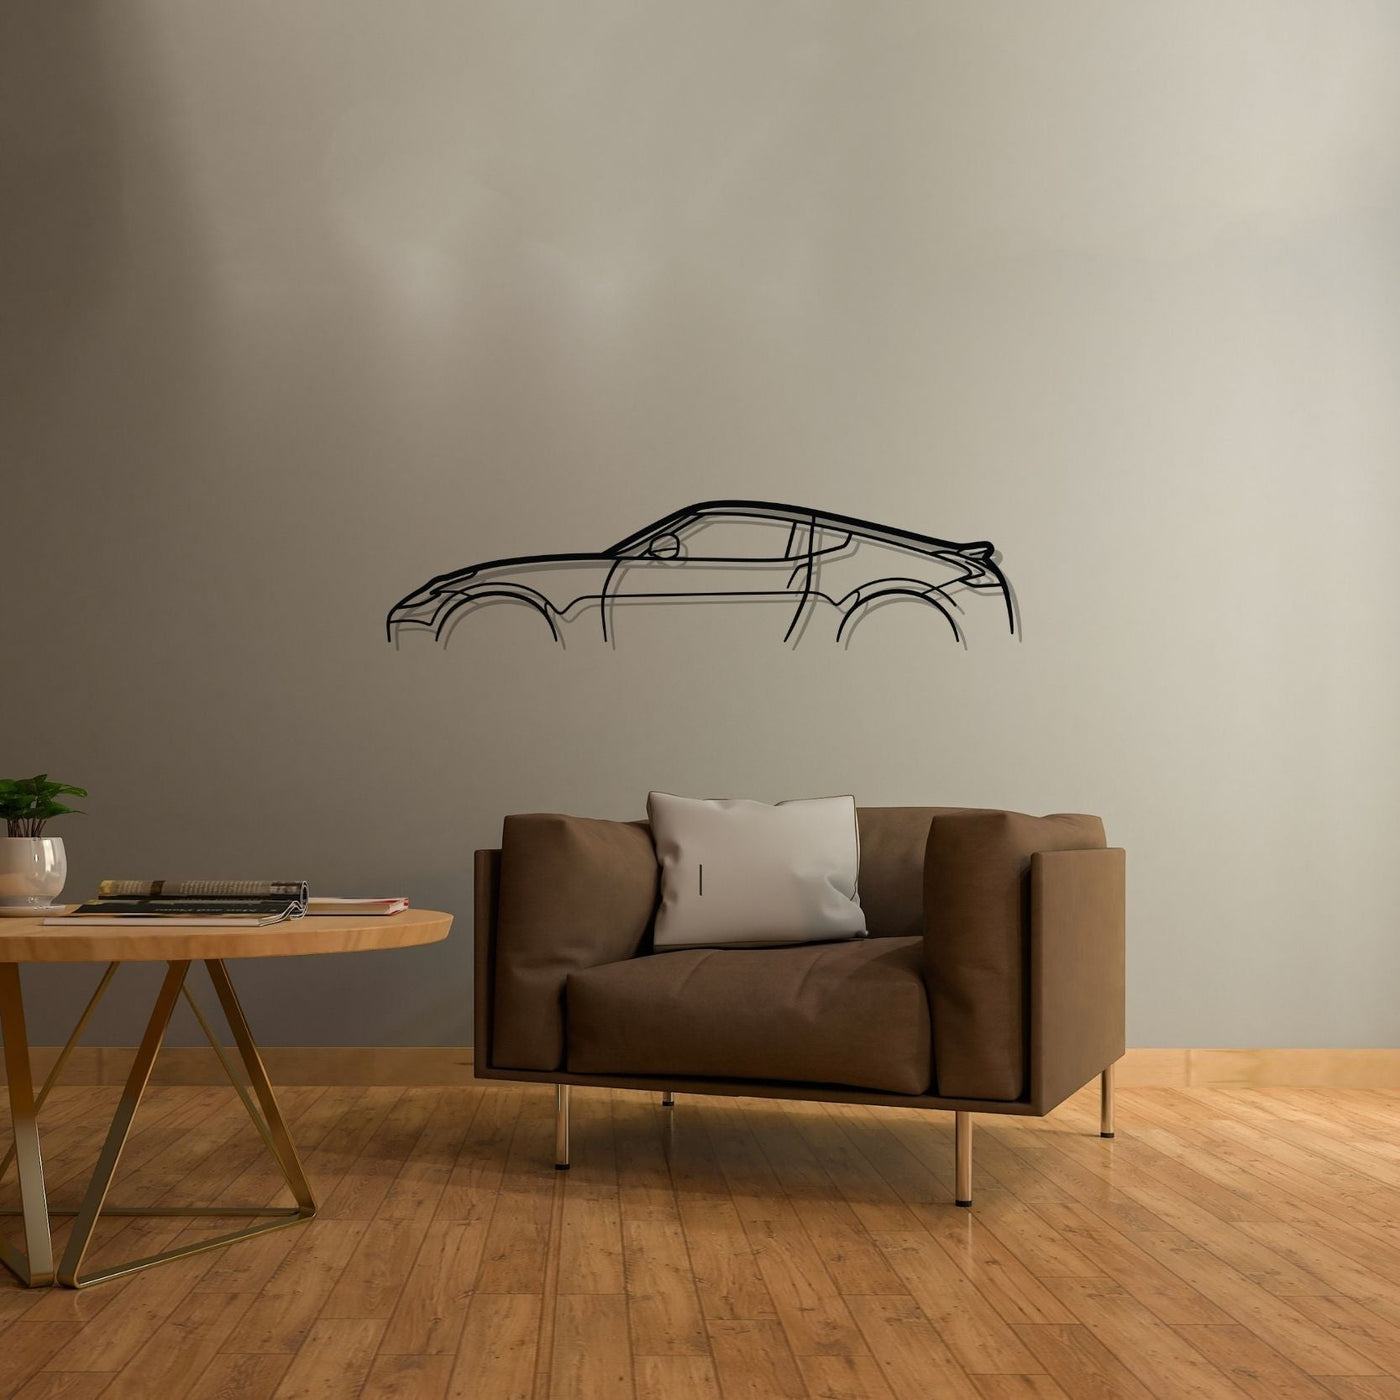 370z Classic Silhouette Metal Wall Art